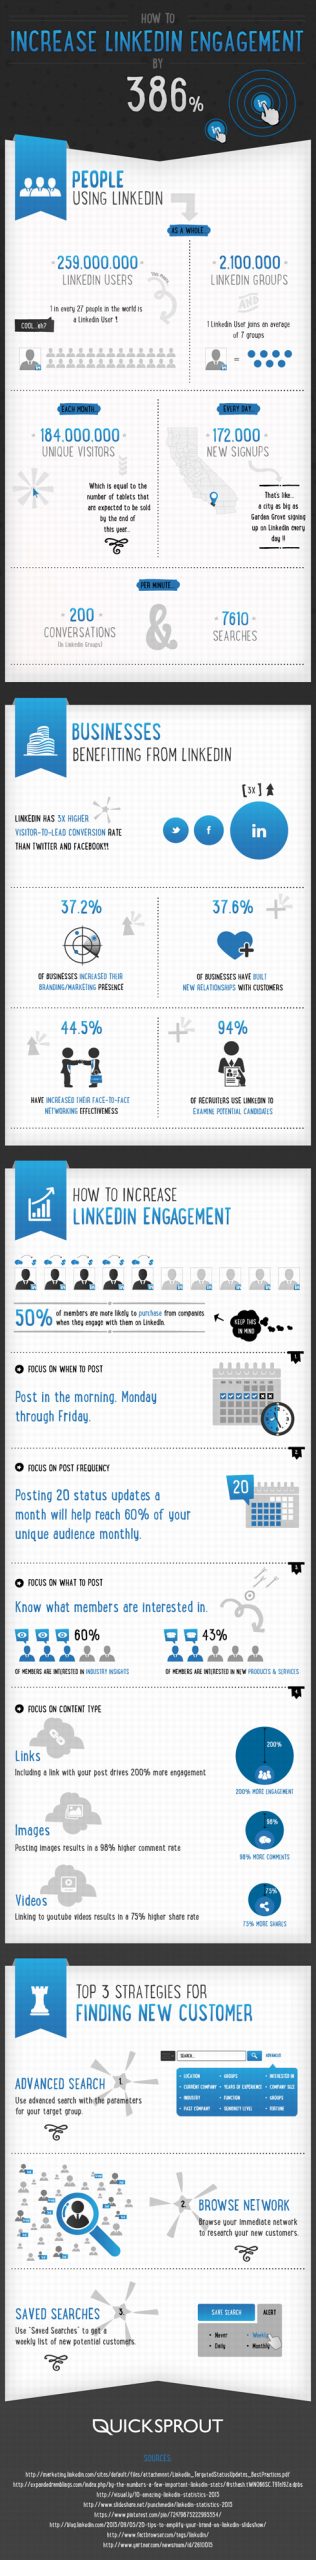 Increase Linkedin Engagement